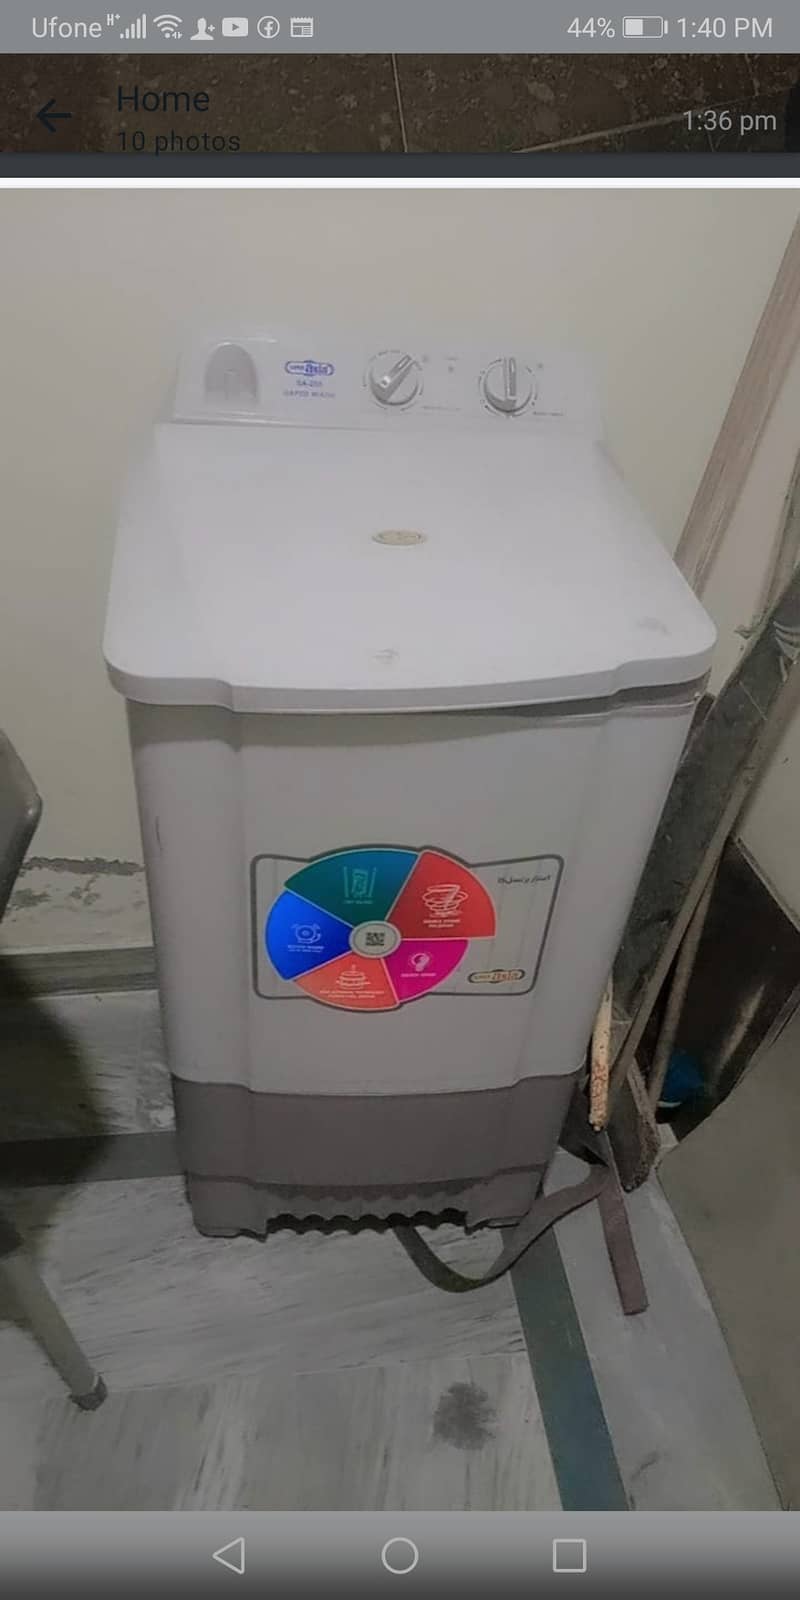 Super Asia Washing Machine 1